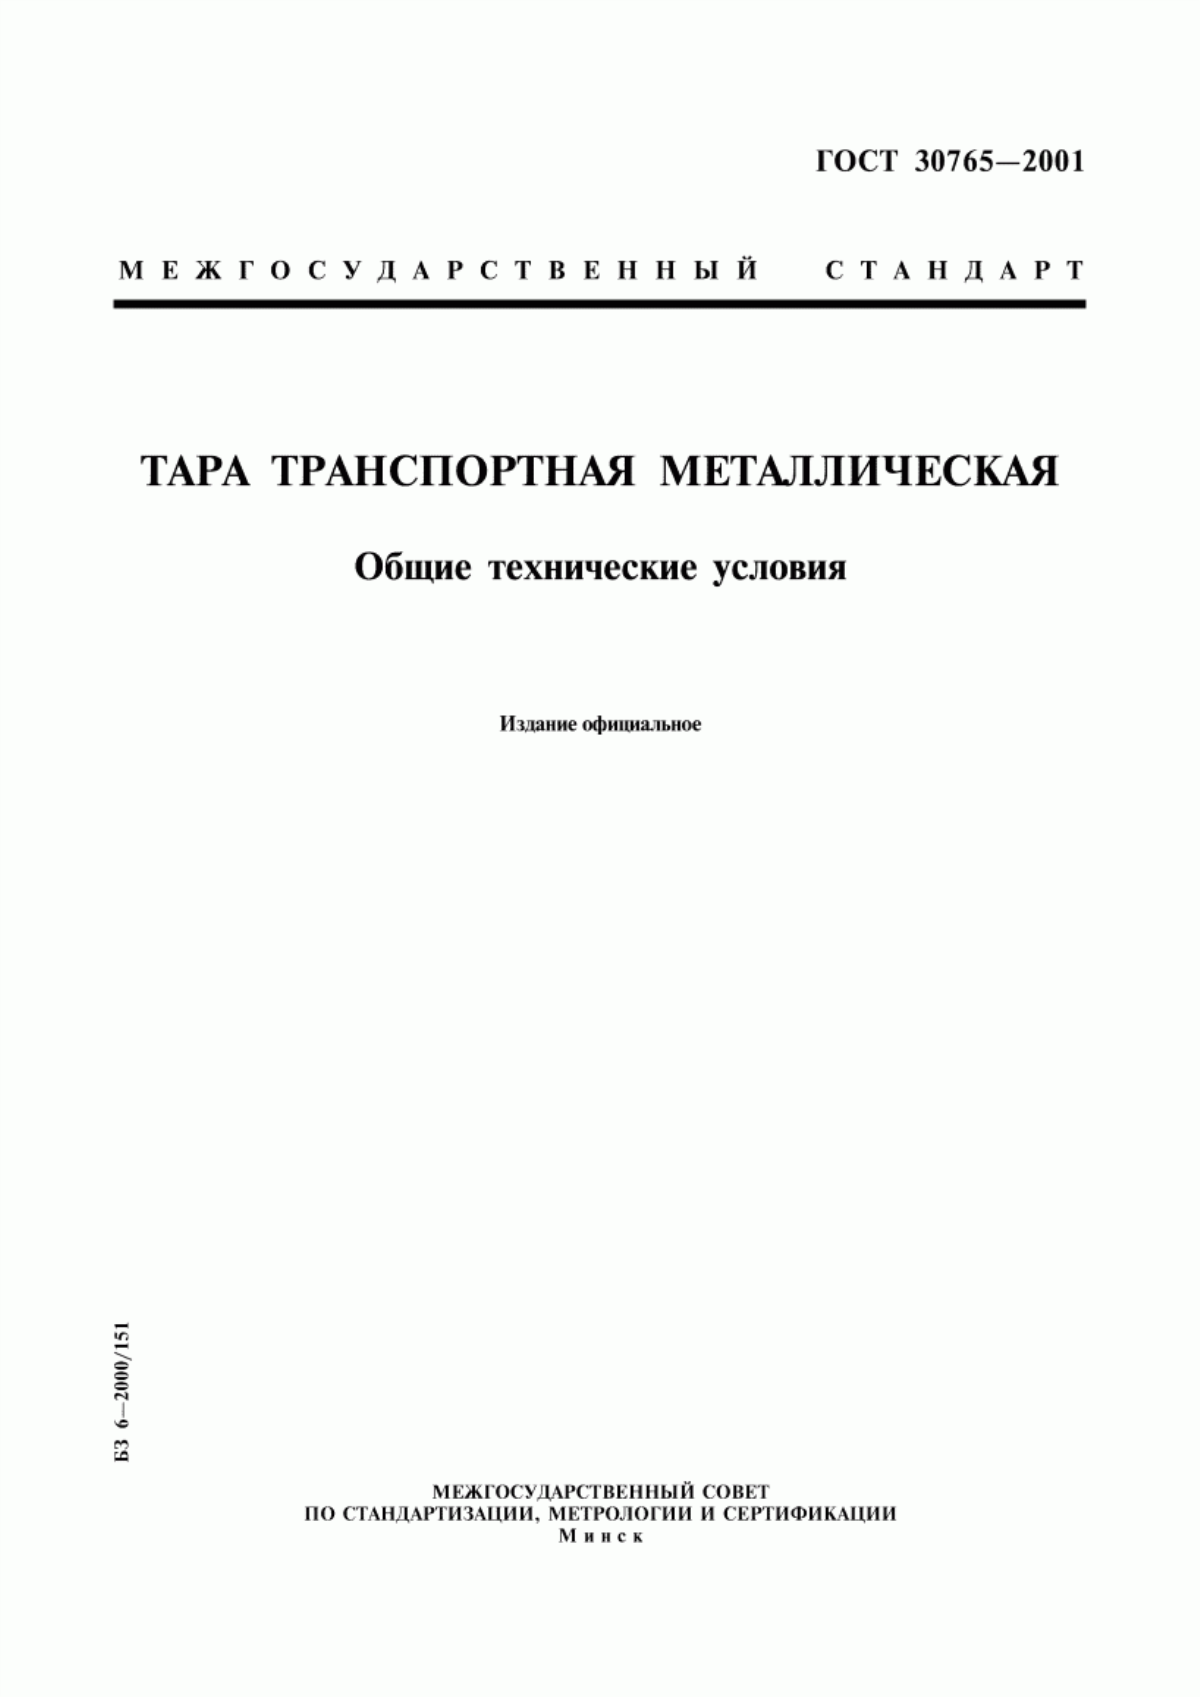 ГОСТ 30765-2001 Тара транспортная металлическая. Общие технические условия